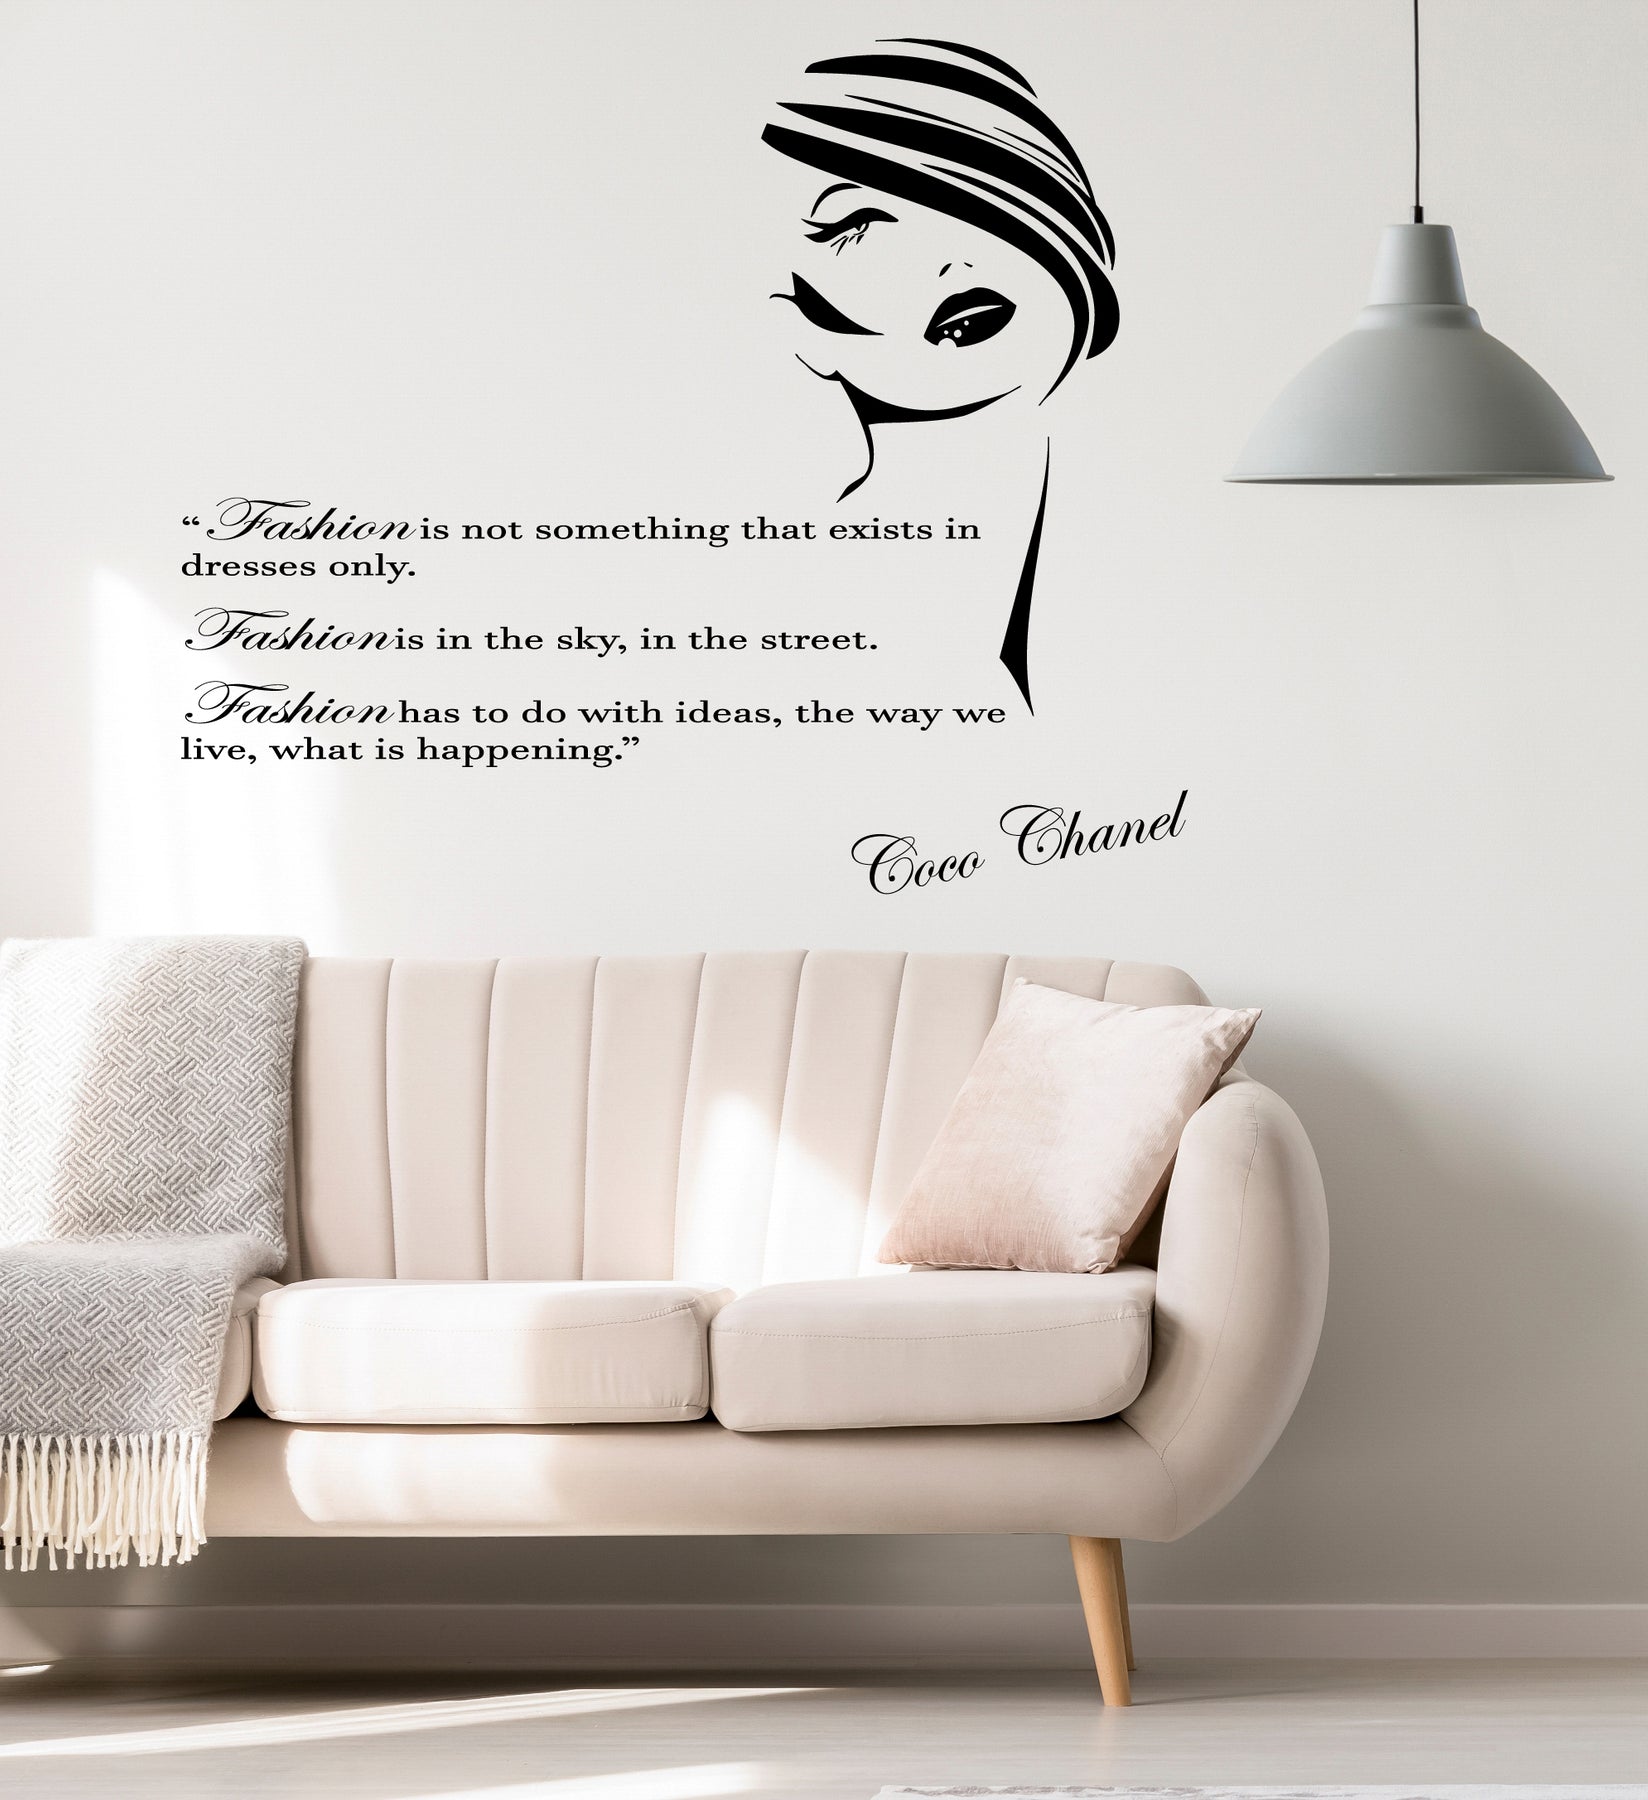 Coco Chanel Inspired Bathroom - Photos & Ideas